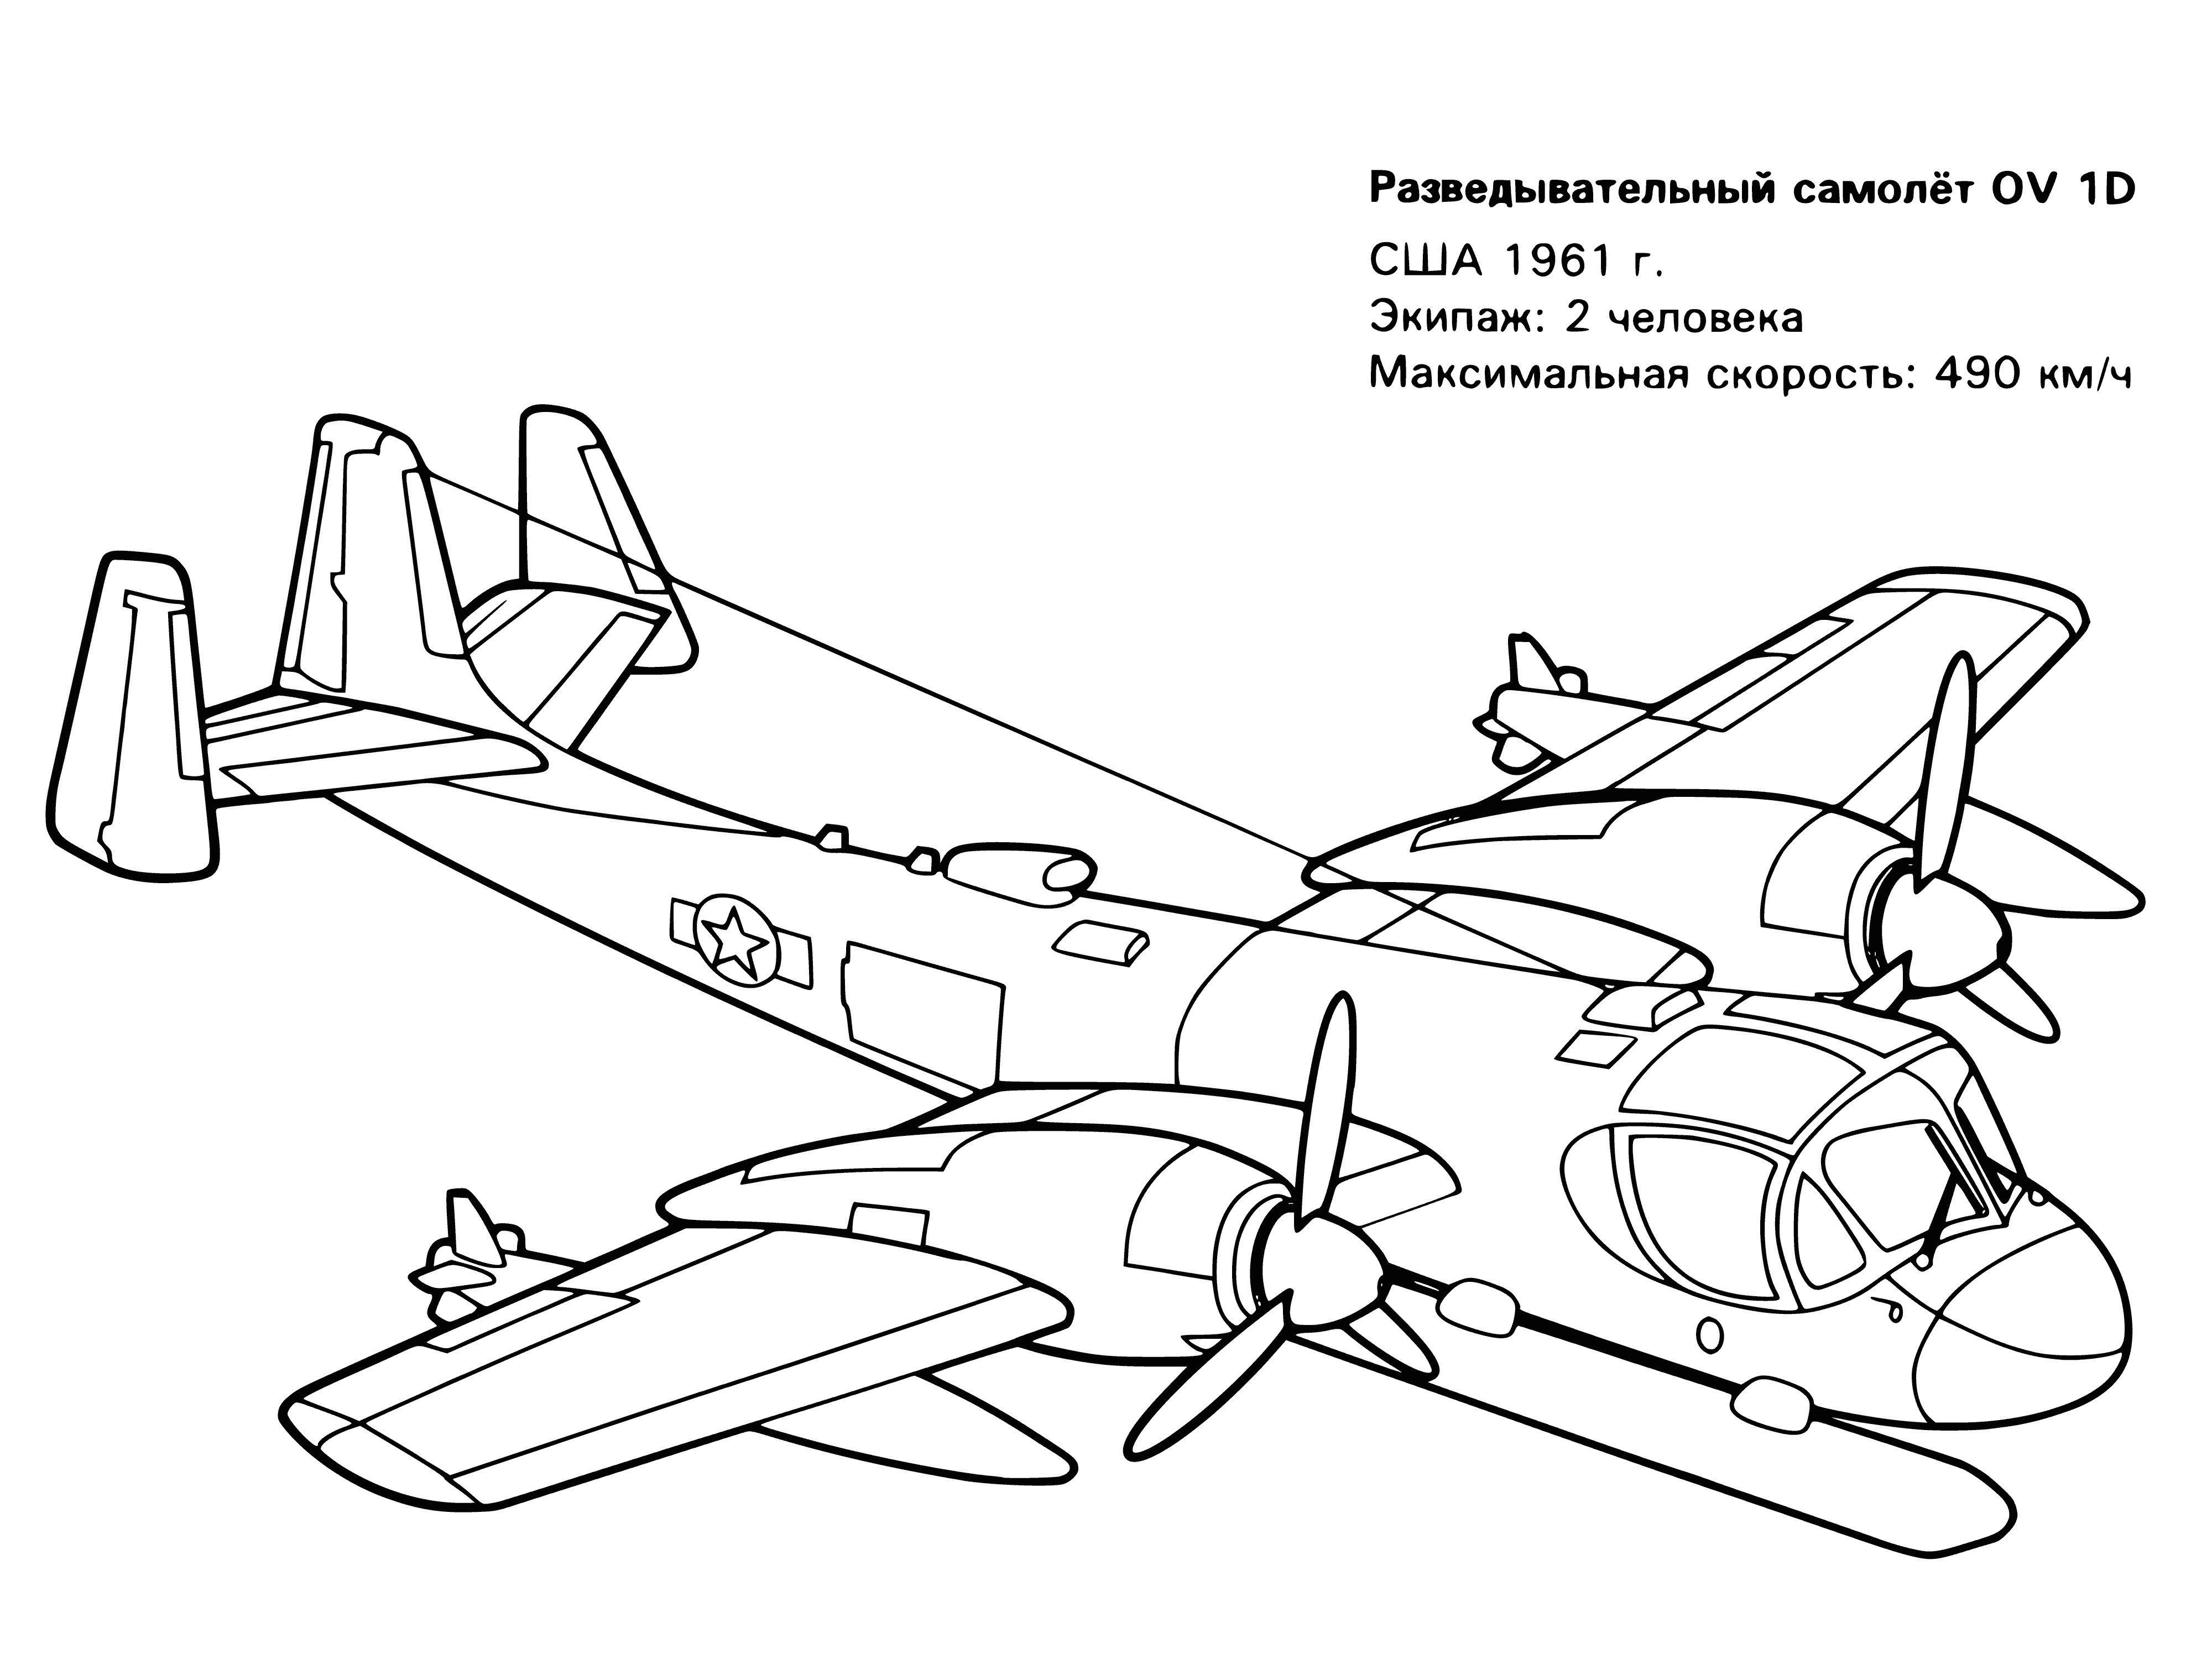 US reconnaissance aircraft 1961 coloring page